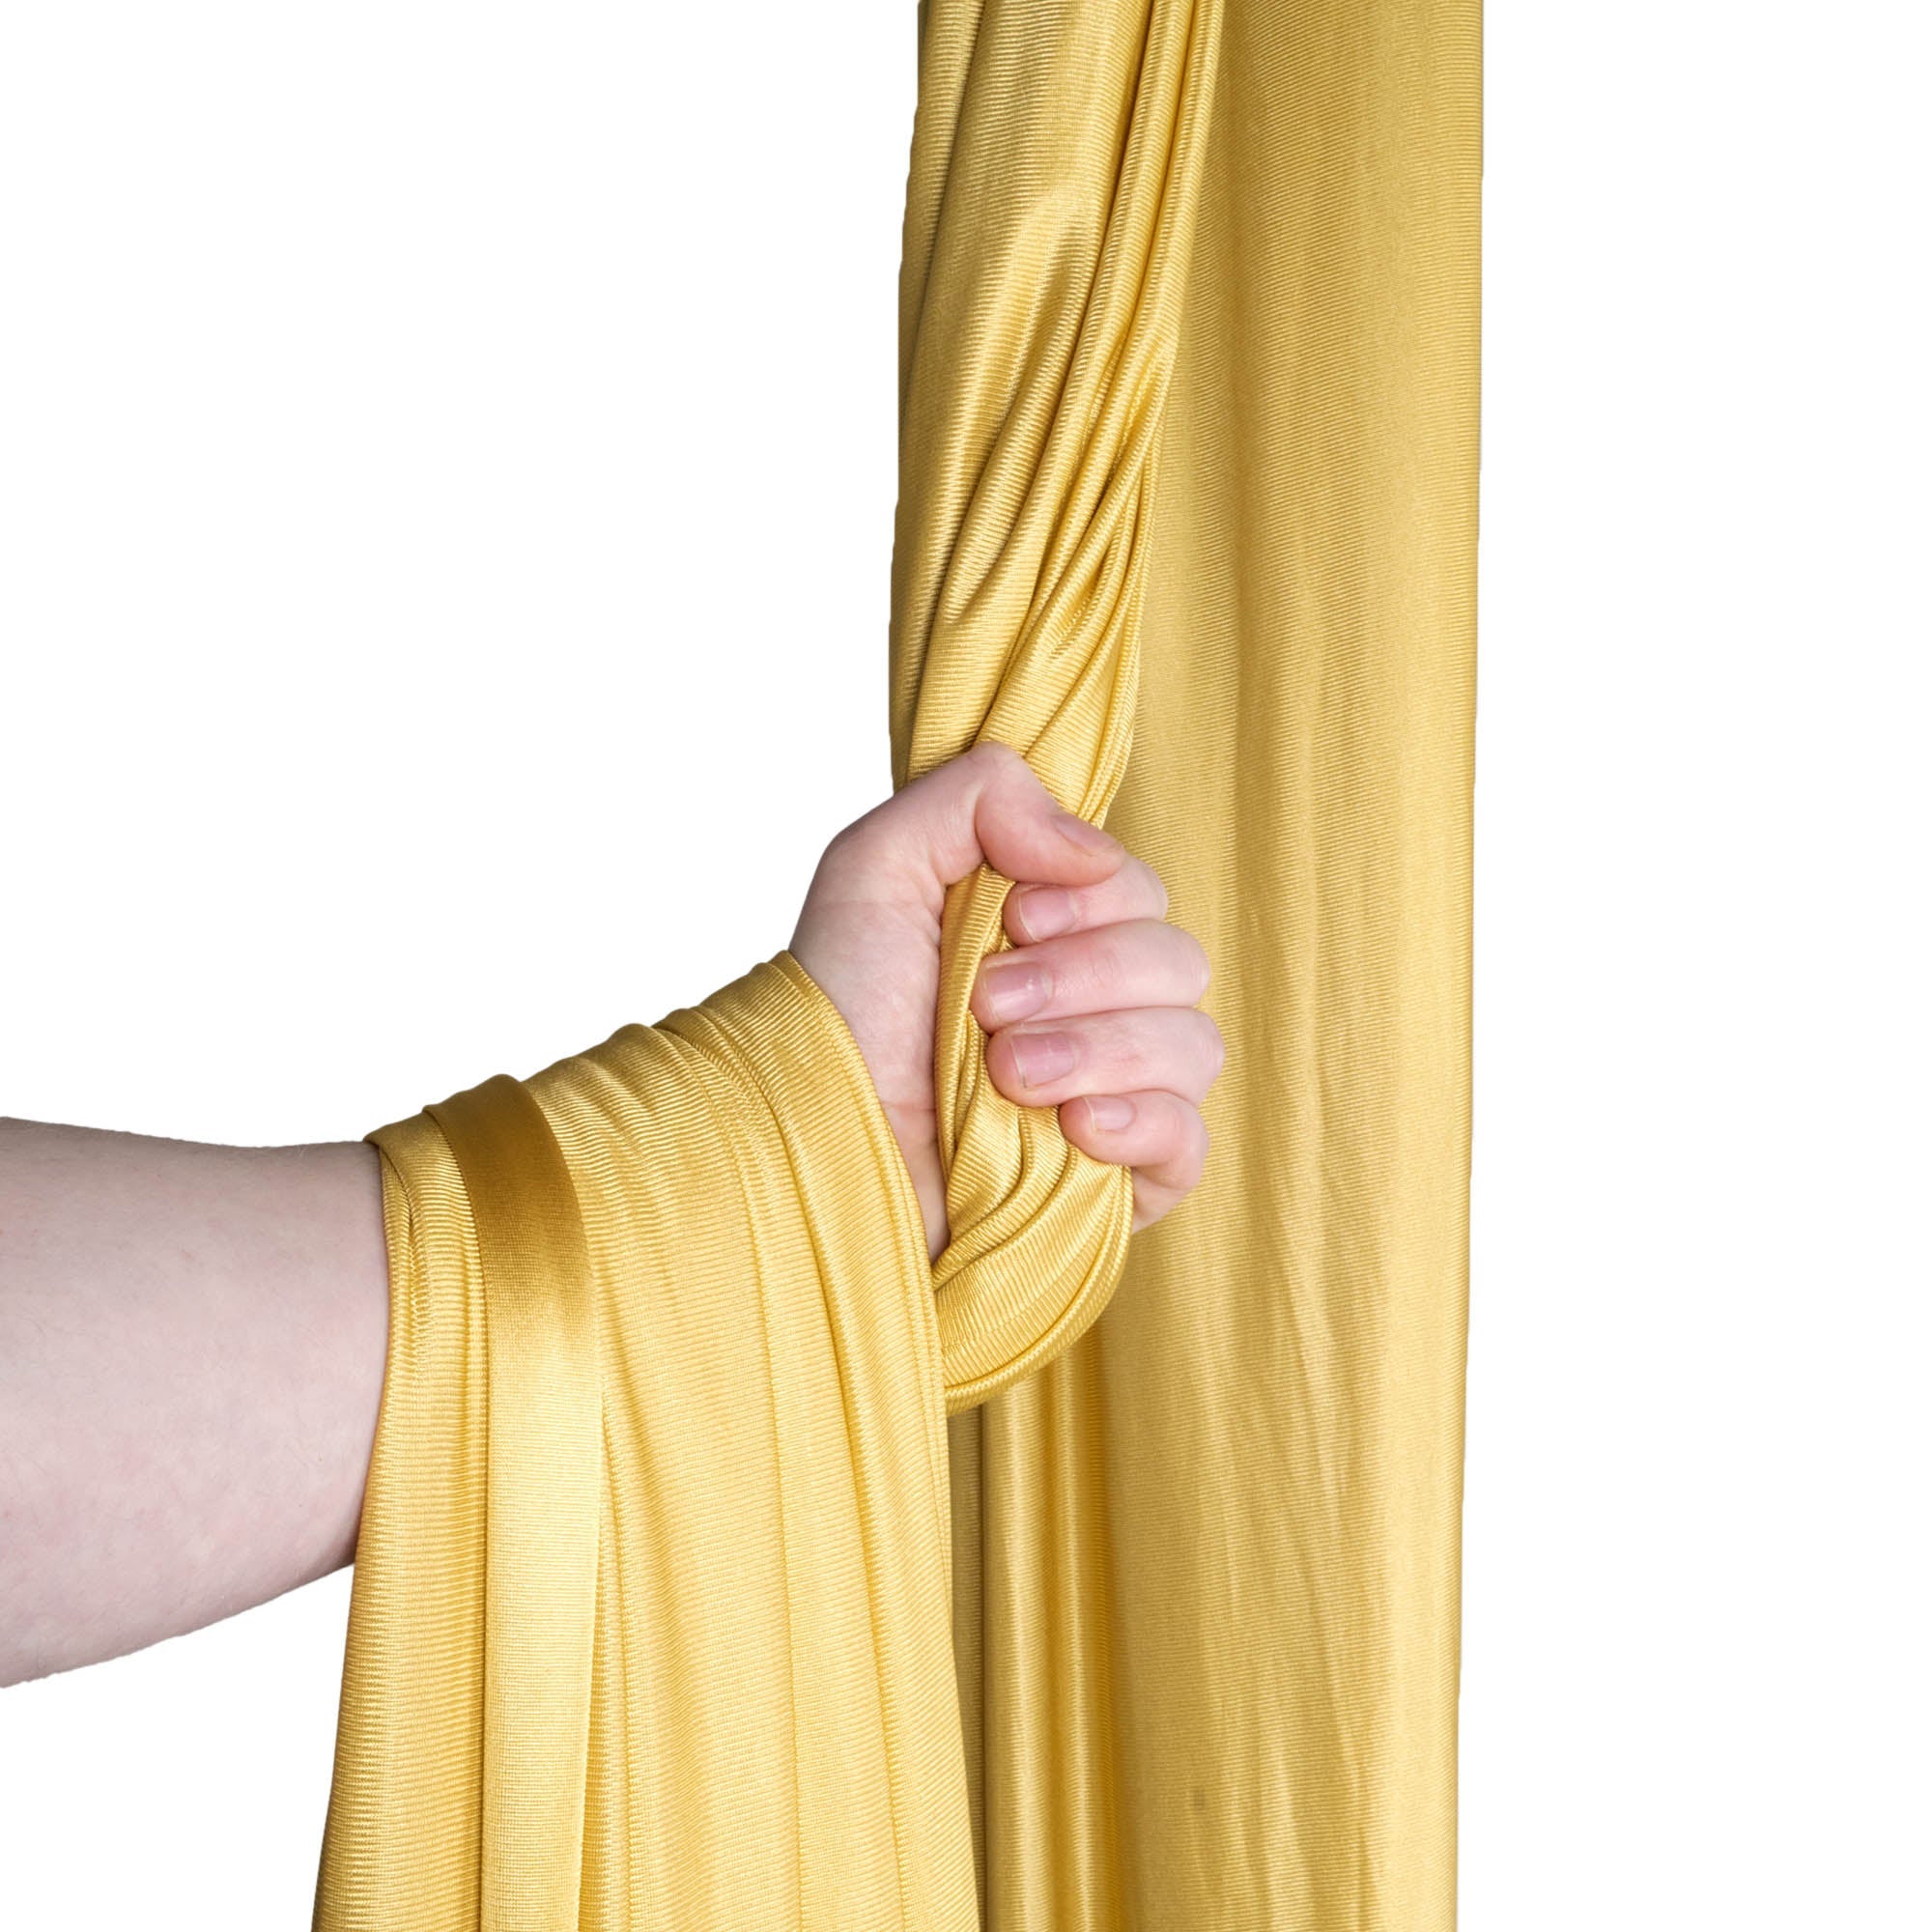 Gold silk wrapped around hand